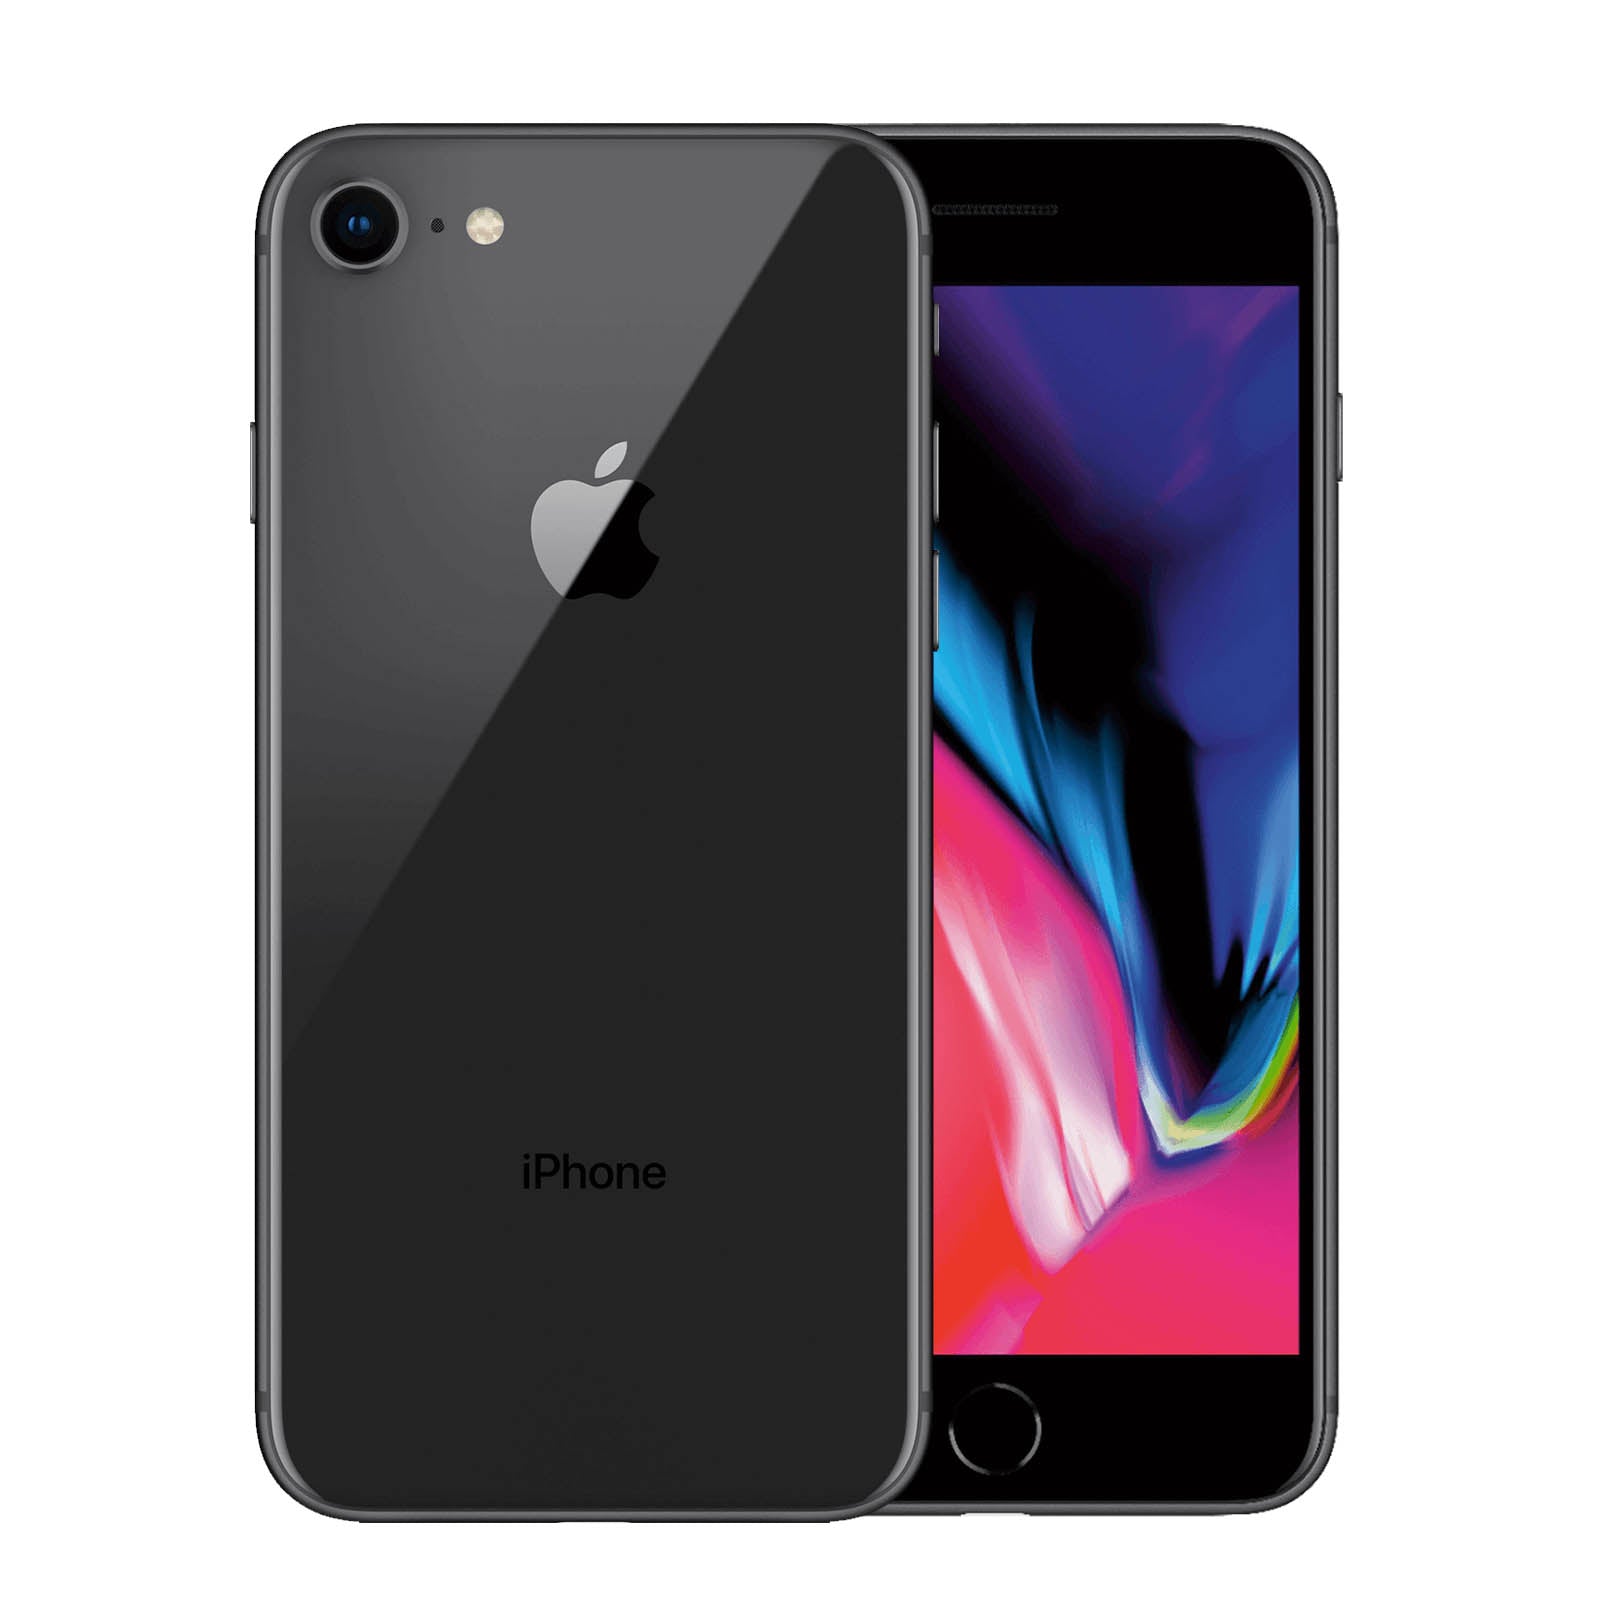 Apple iPhone 8 128GB Space Grey Good - Unlocked